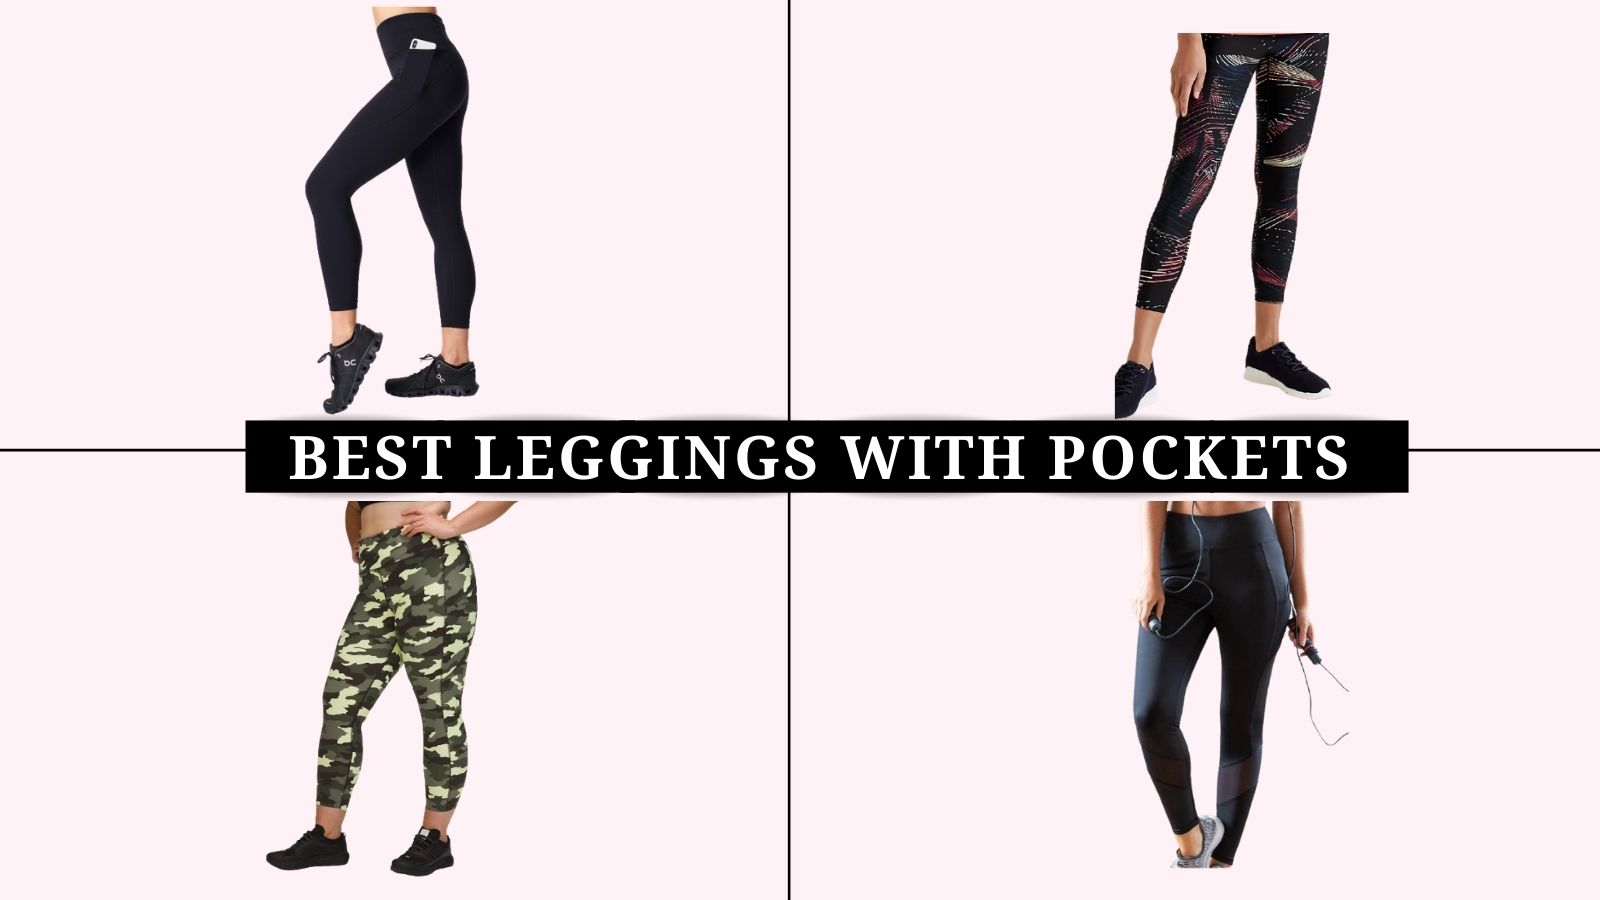 Women's Indestructible Tough Leggings w/ Pockets – GORUCK